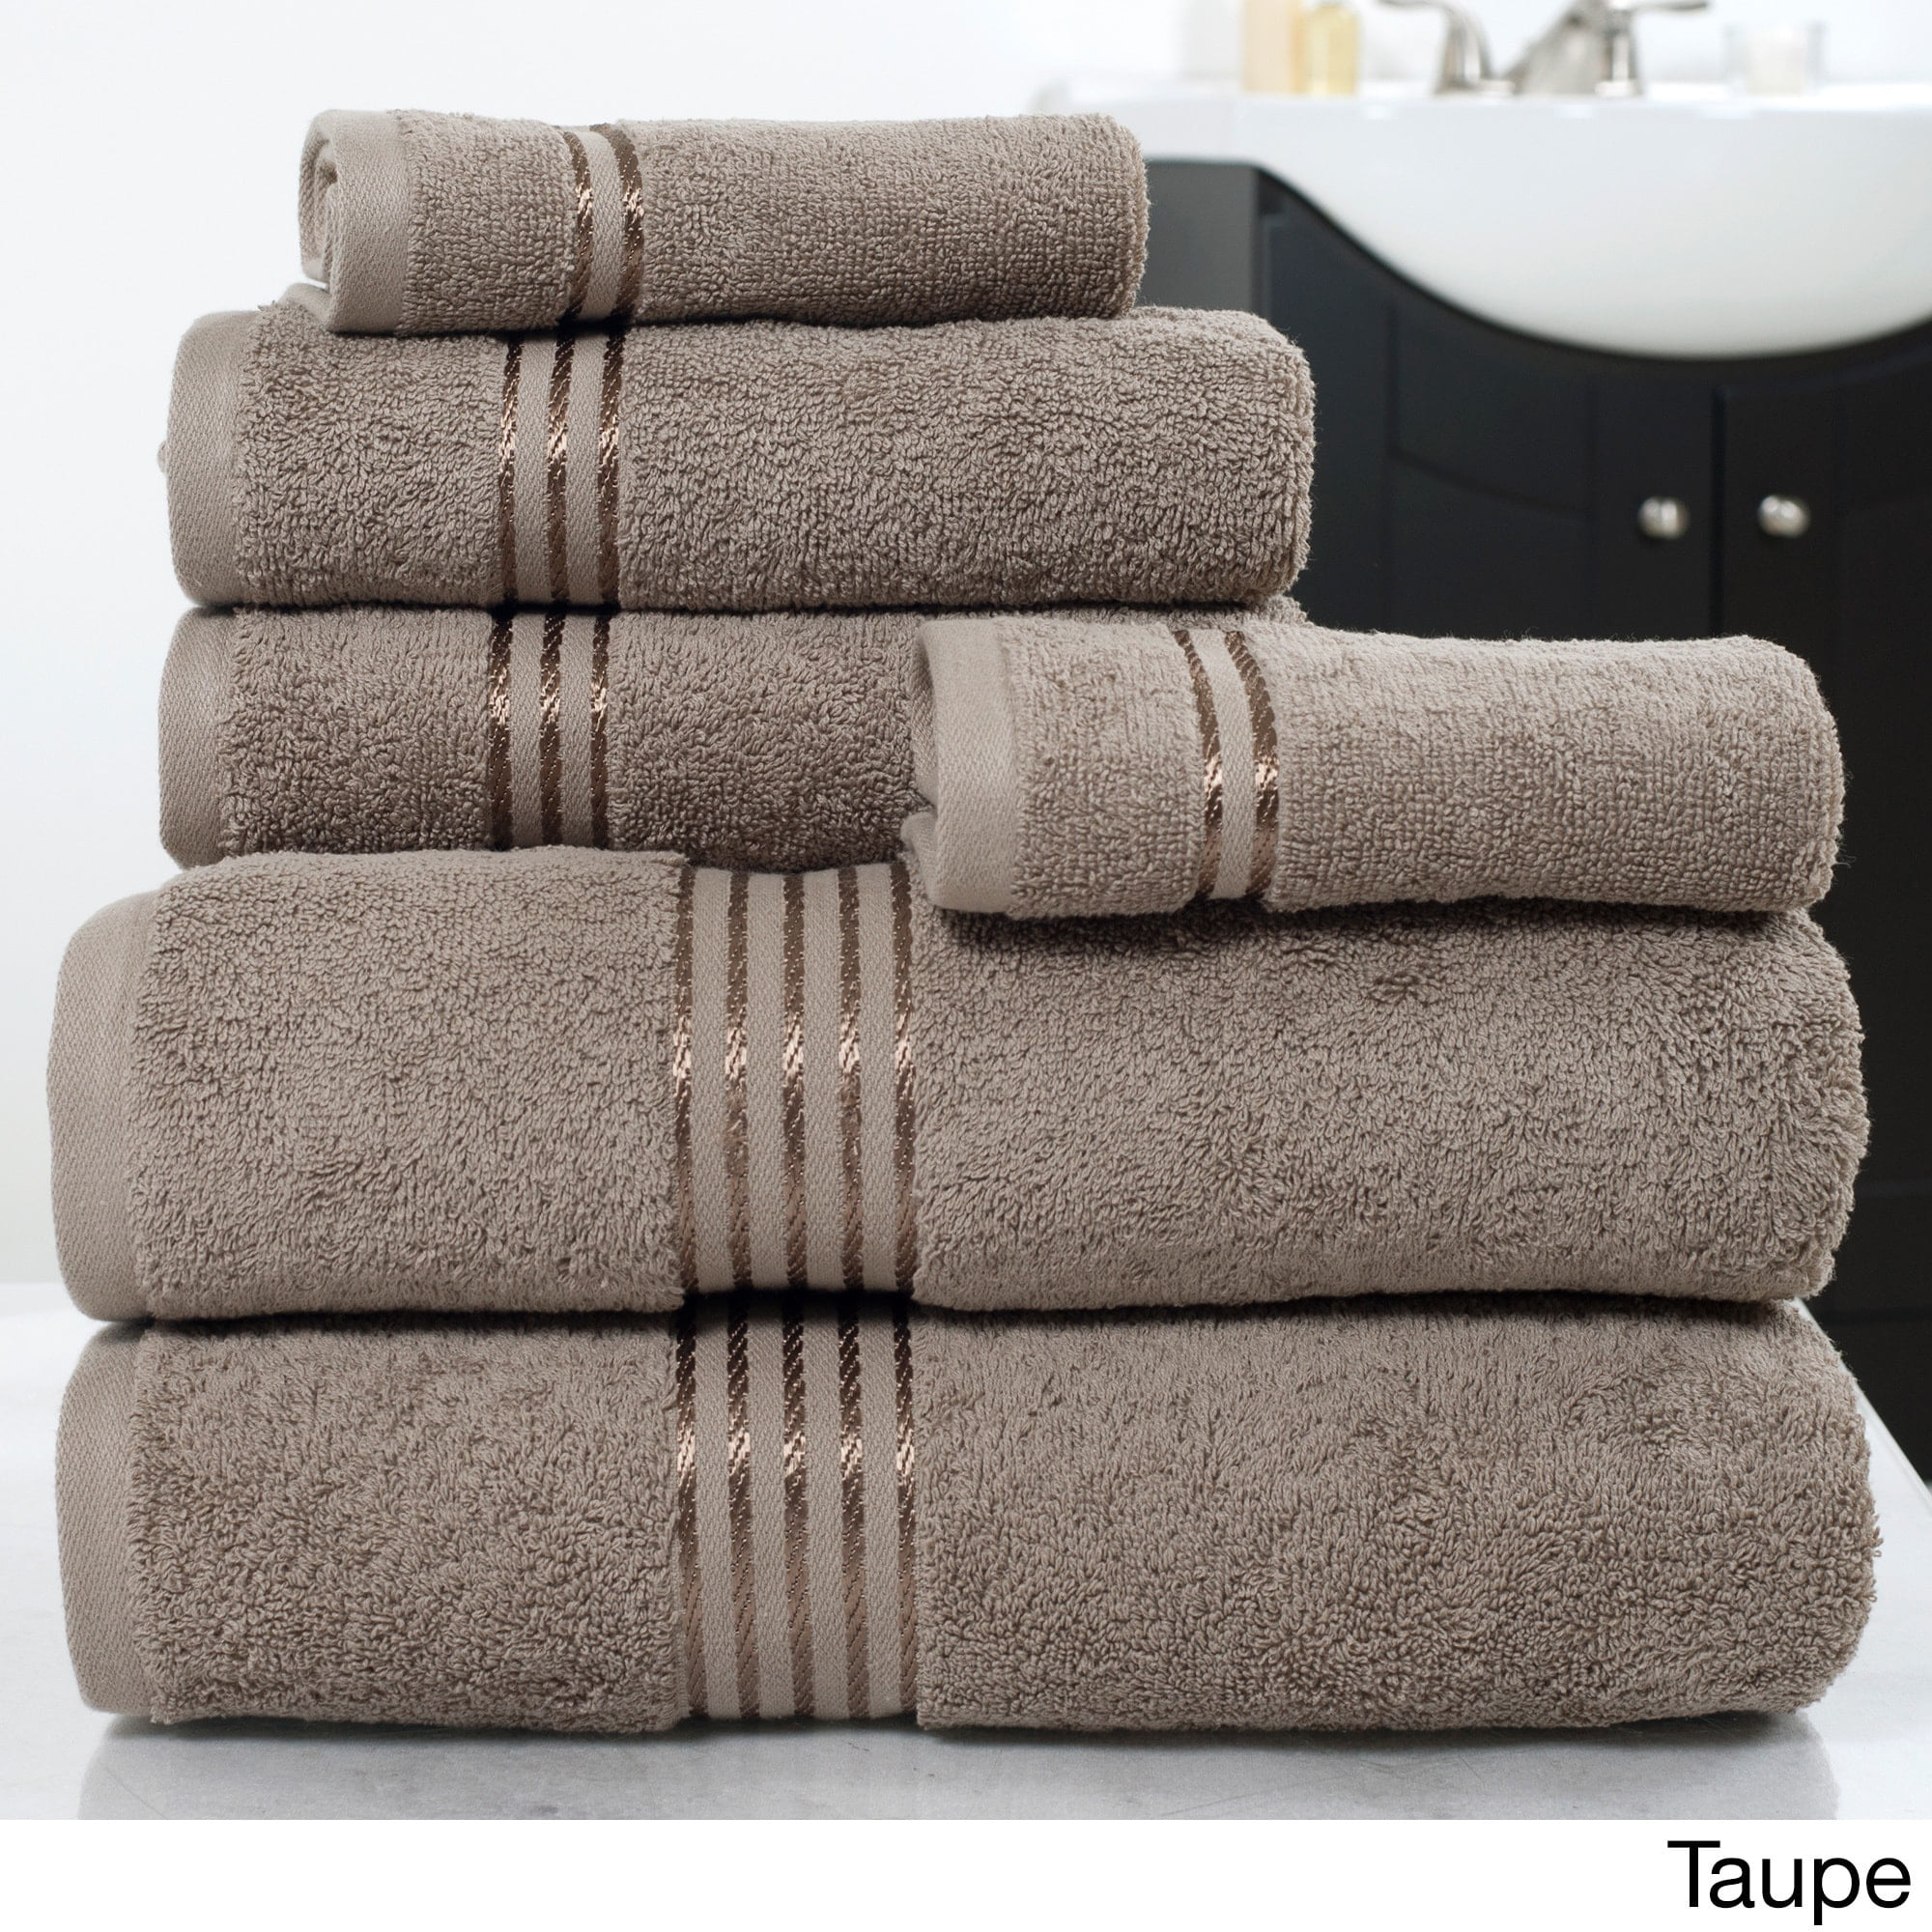 Rapport 100% Cotton "Windsor" 2 Pack Bath Sheets Towel 11 Colours Available 